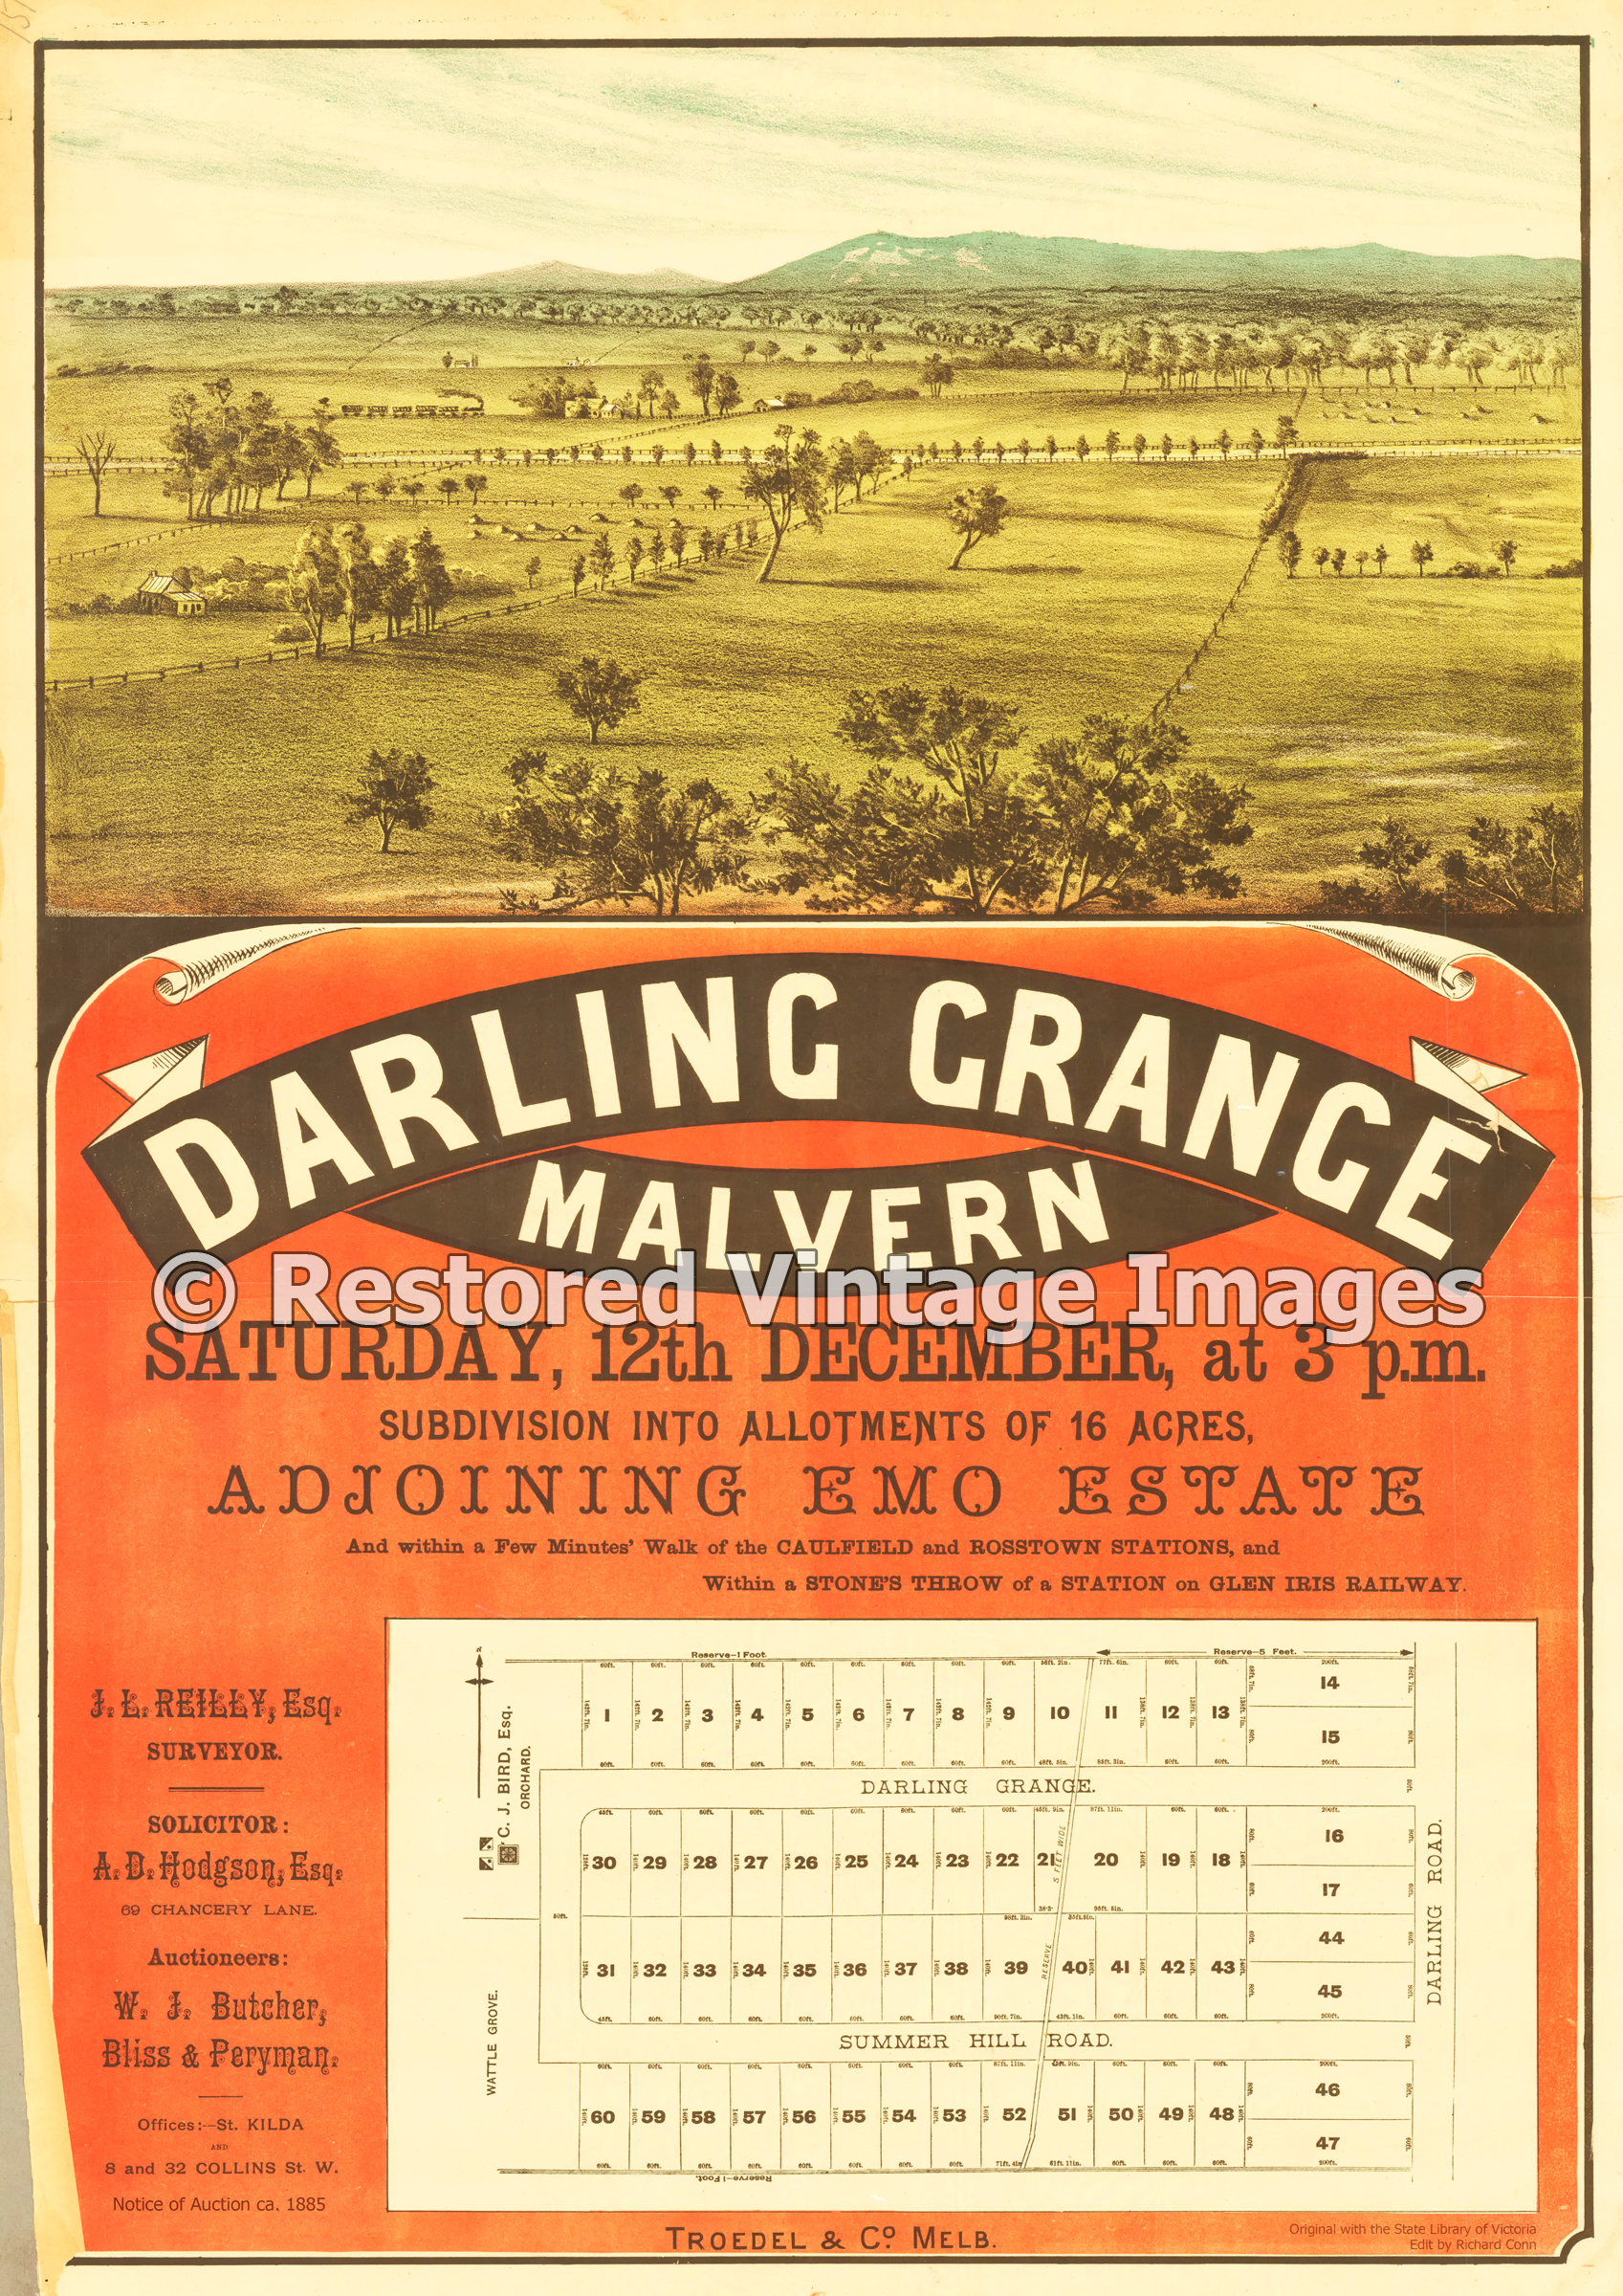 Darling Grange Malvern 1885 – Malvern East